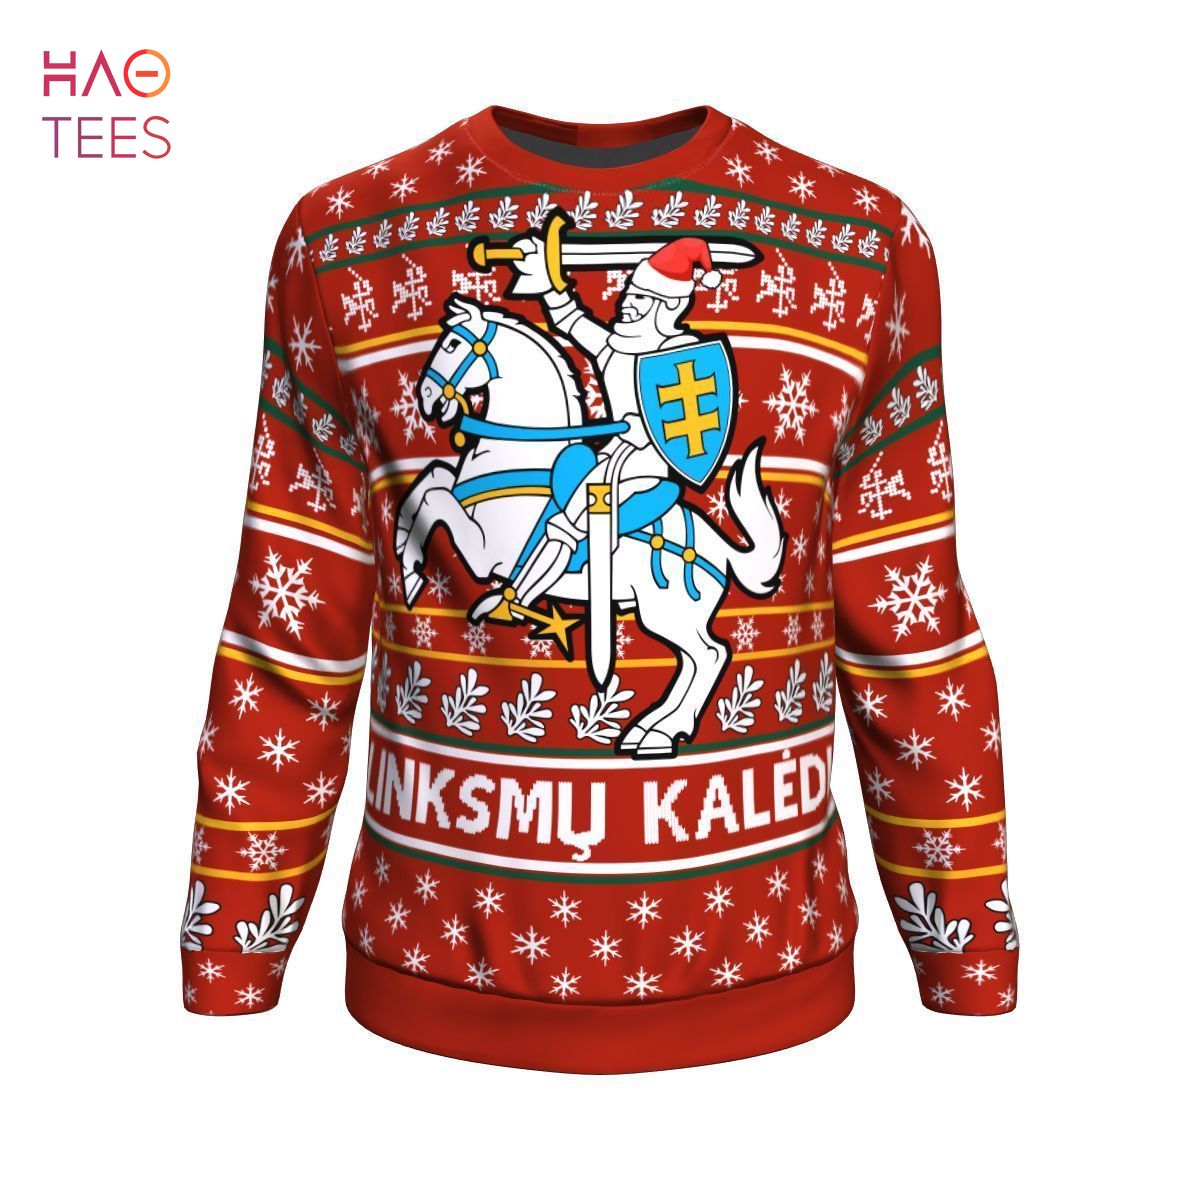 Lithuania Ugly Christmas Sweater